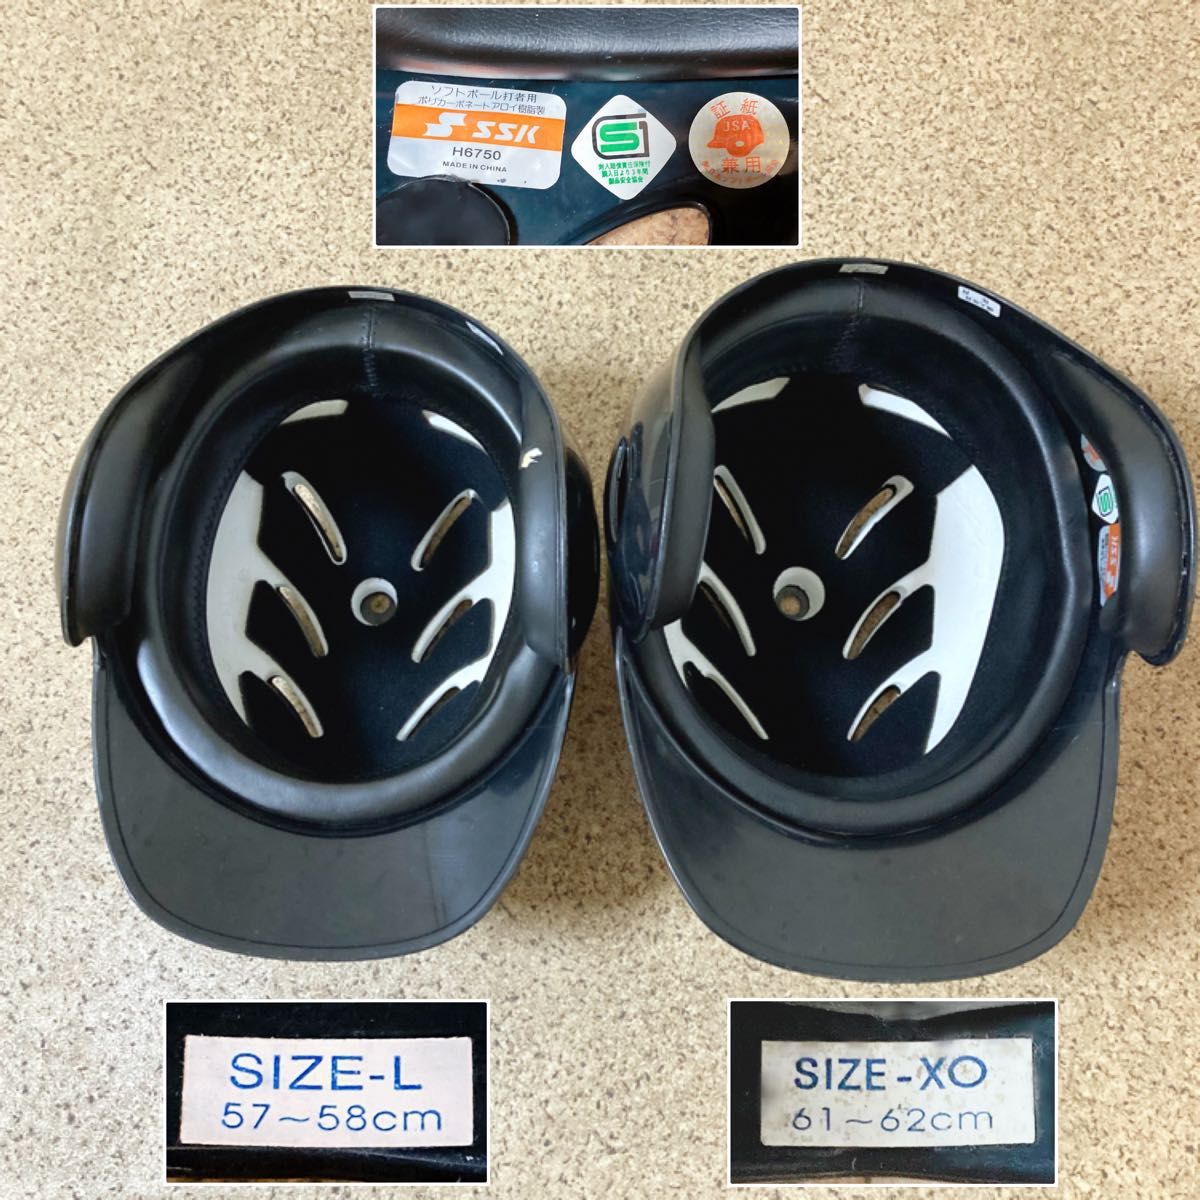 [ZETT/SSK] ヘルメット ６個セット (両耳) / ソフトボール 野球